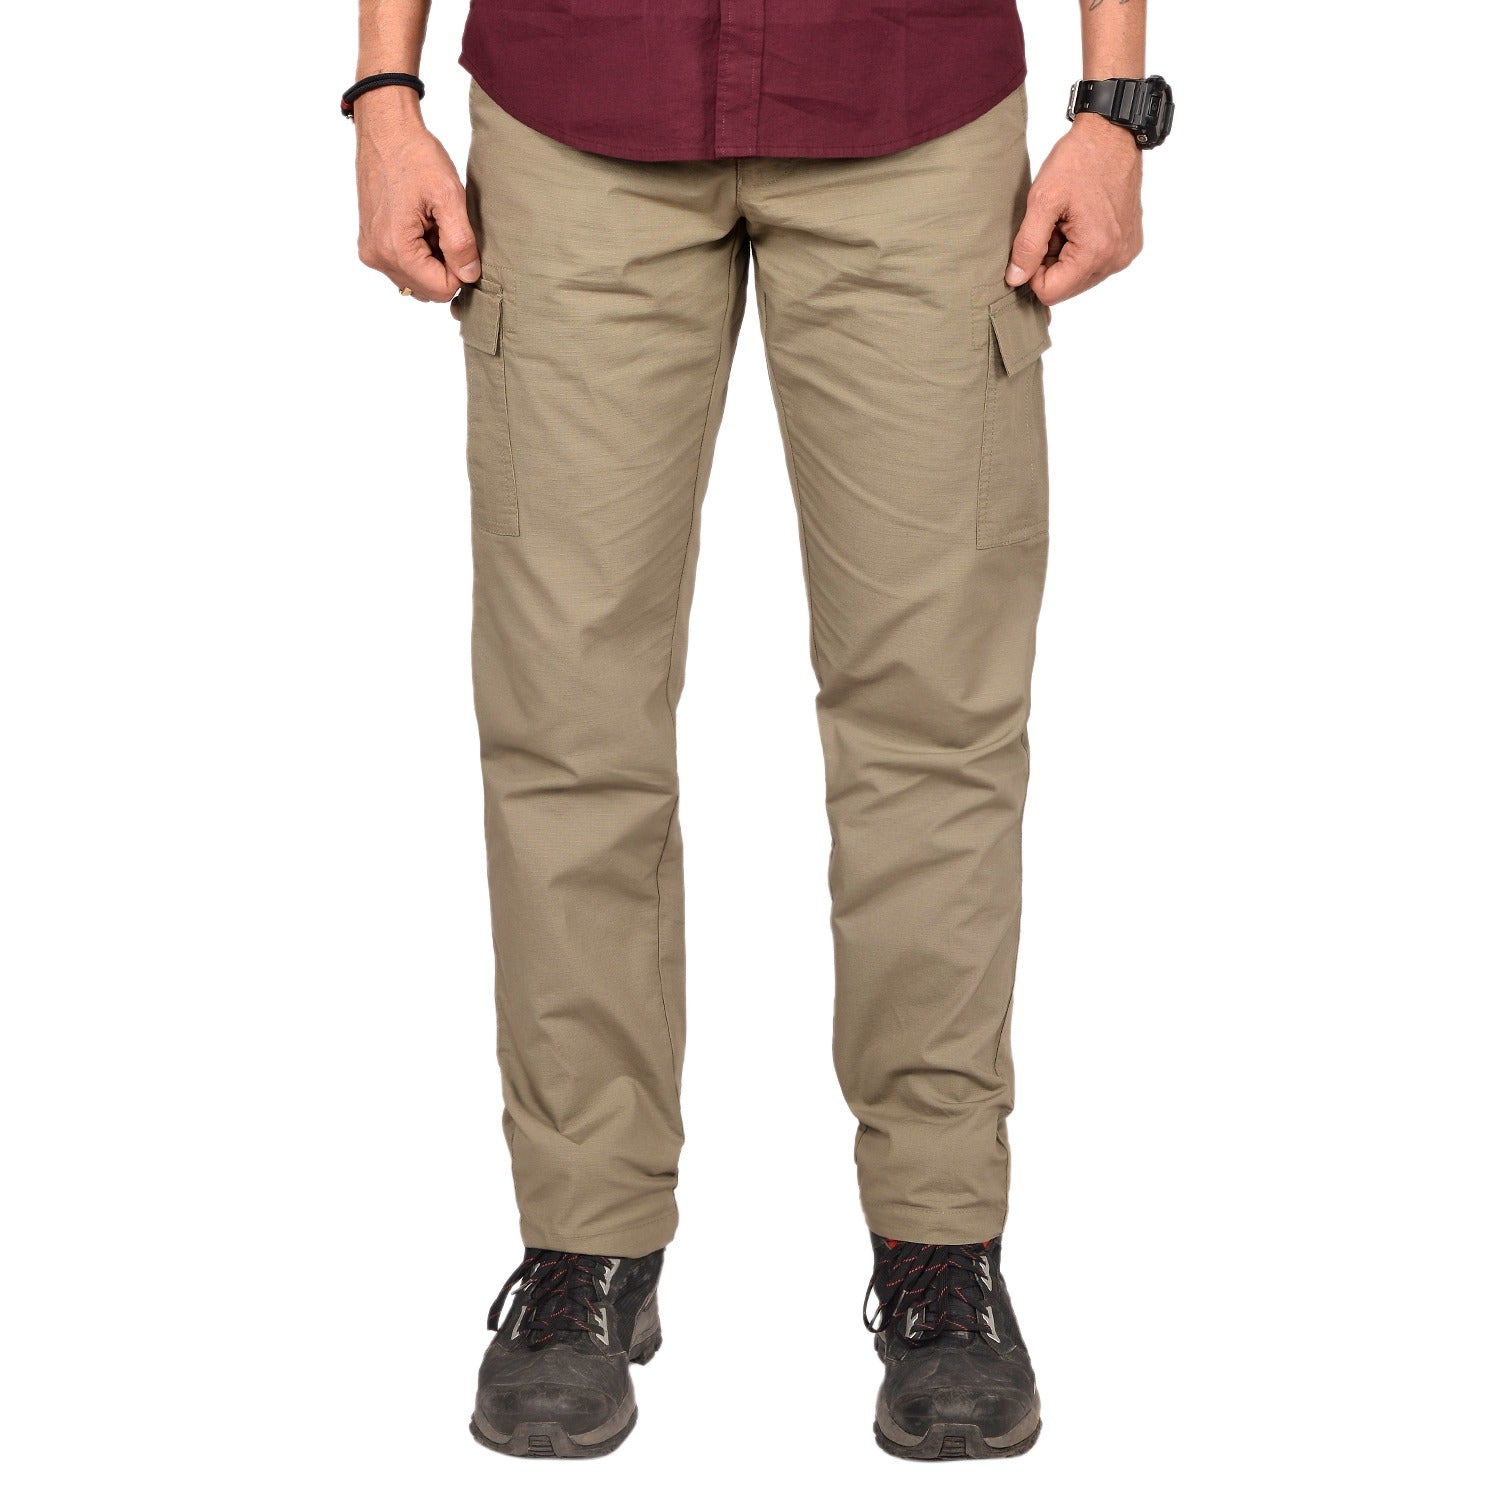 Buy Gokyo Corbett Outdoor Cargo Pants Olive Green | Trekking & Hiking Pants at Gokyo Outdoor Clothing & Gear